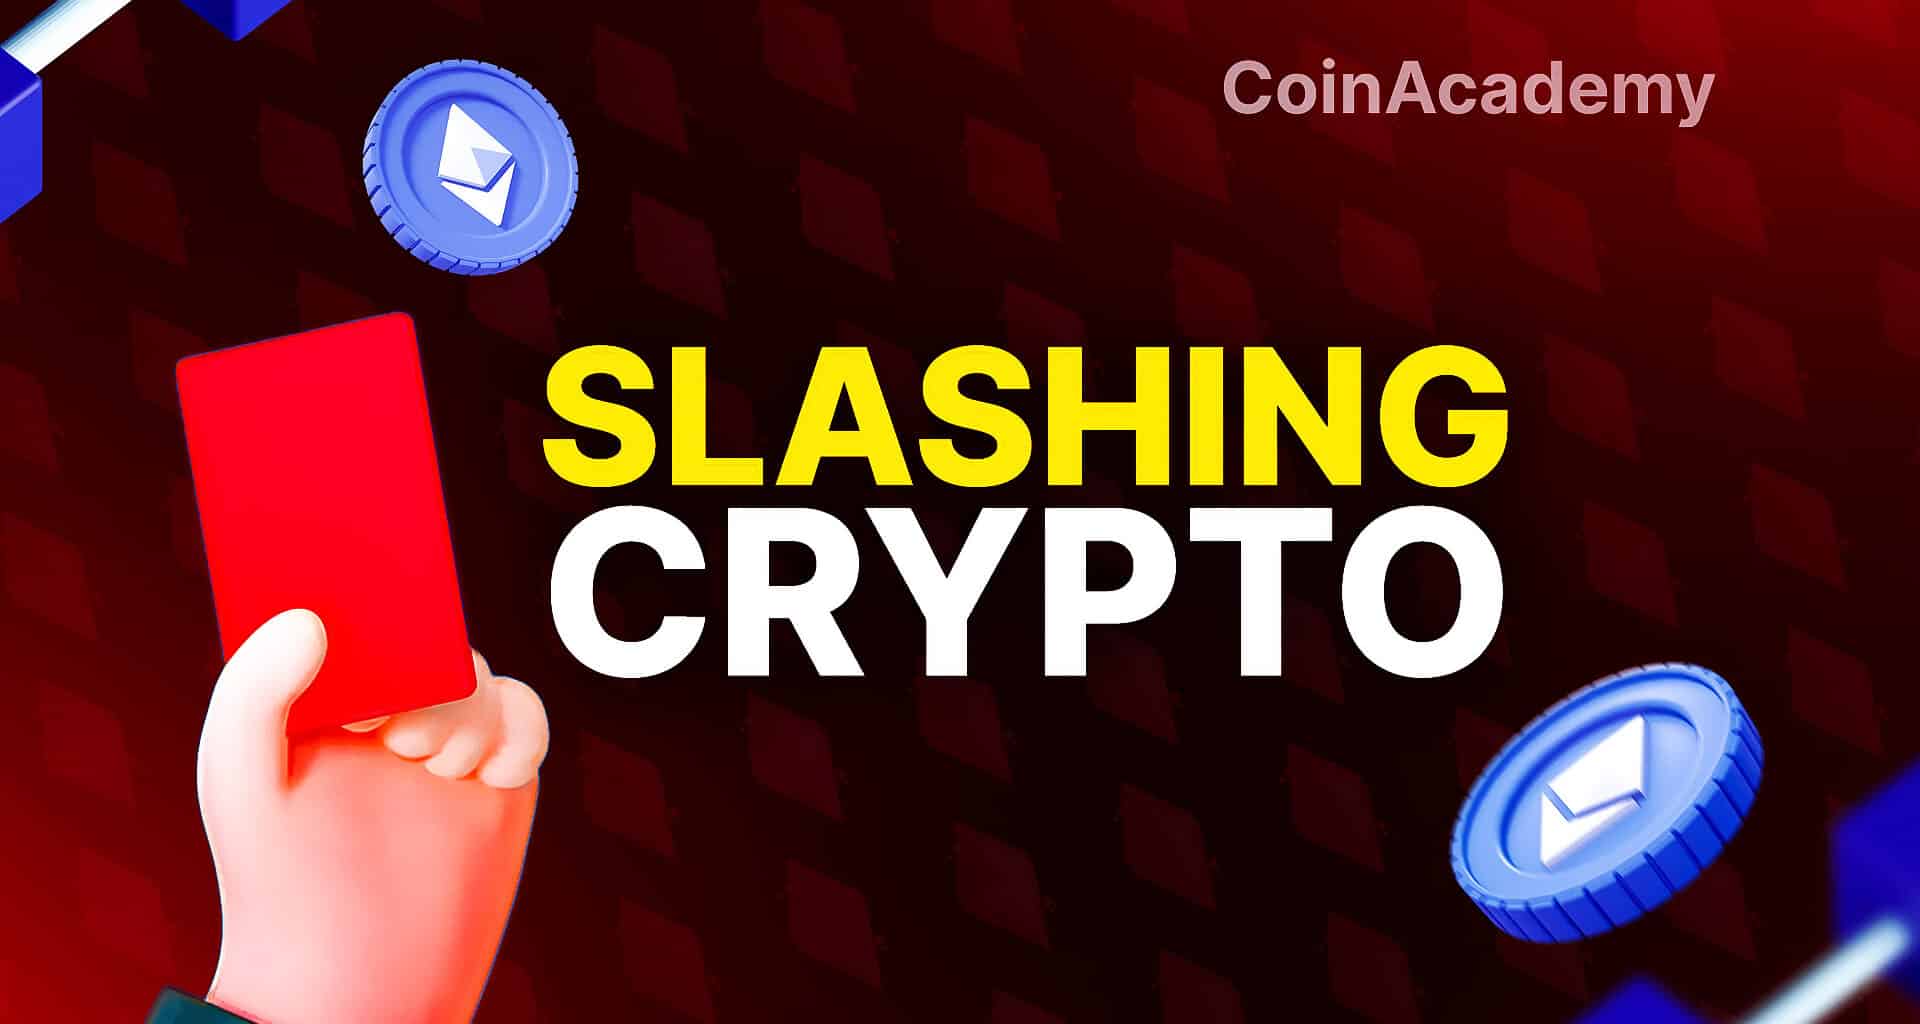 Slashing crypto